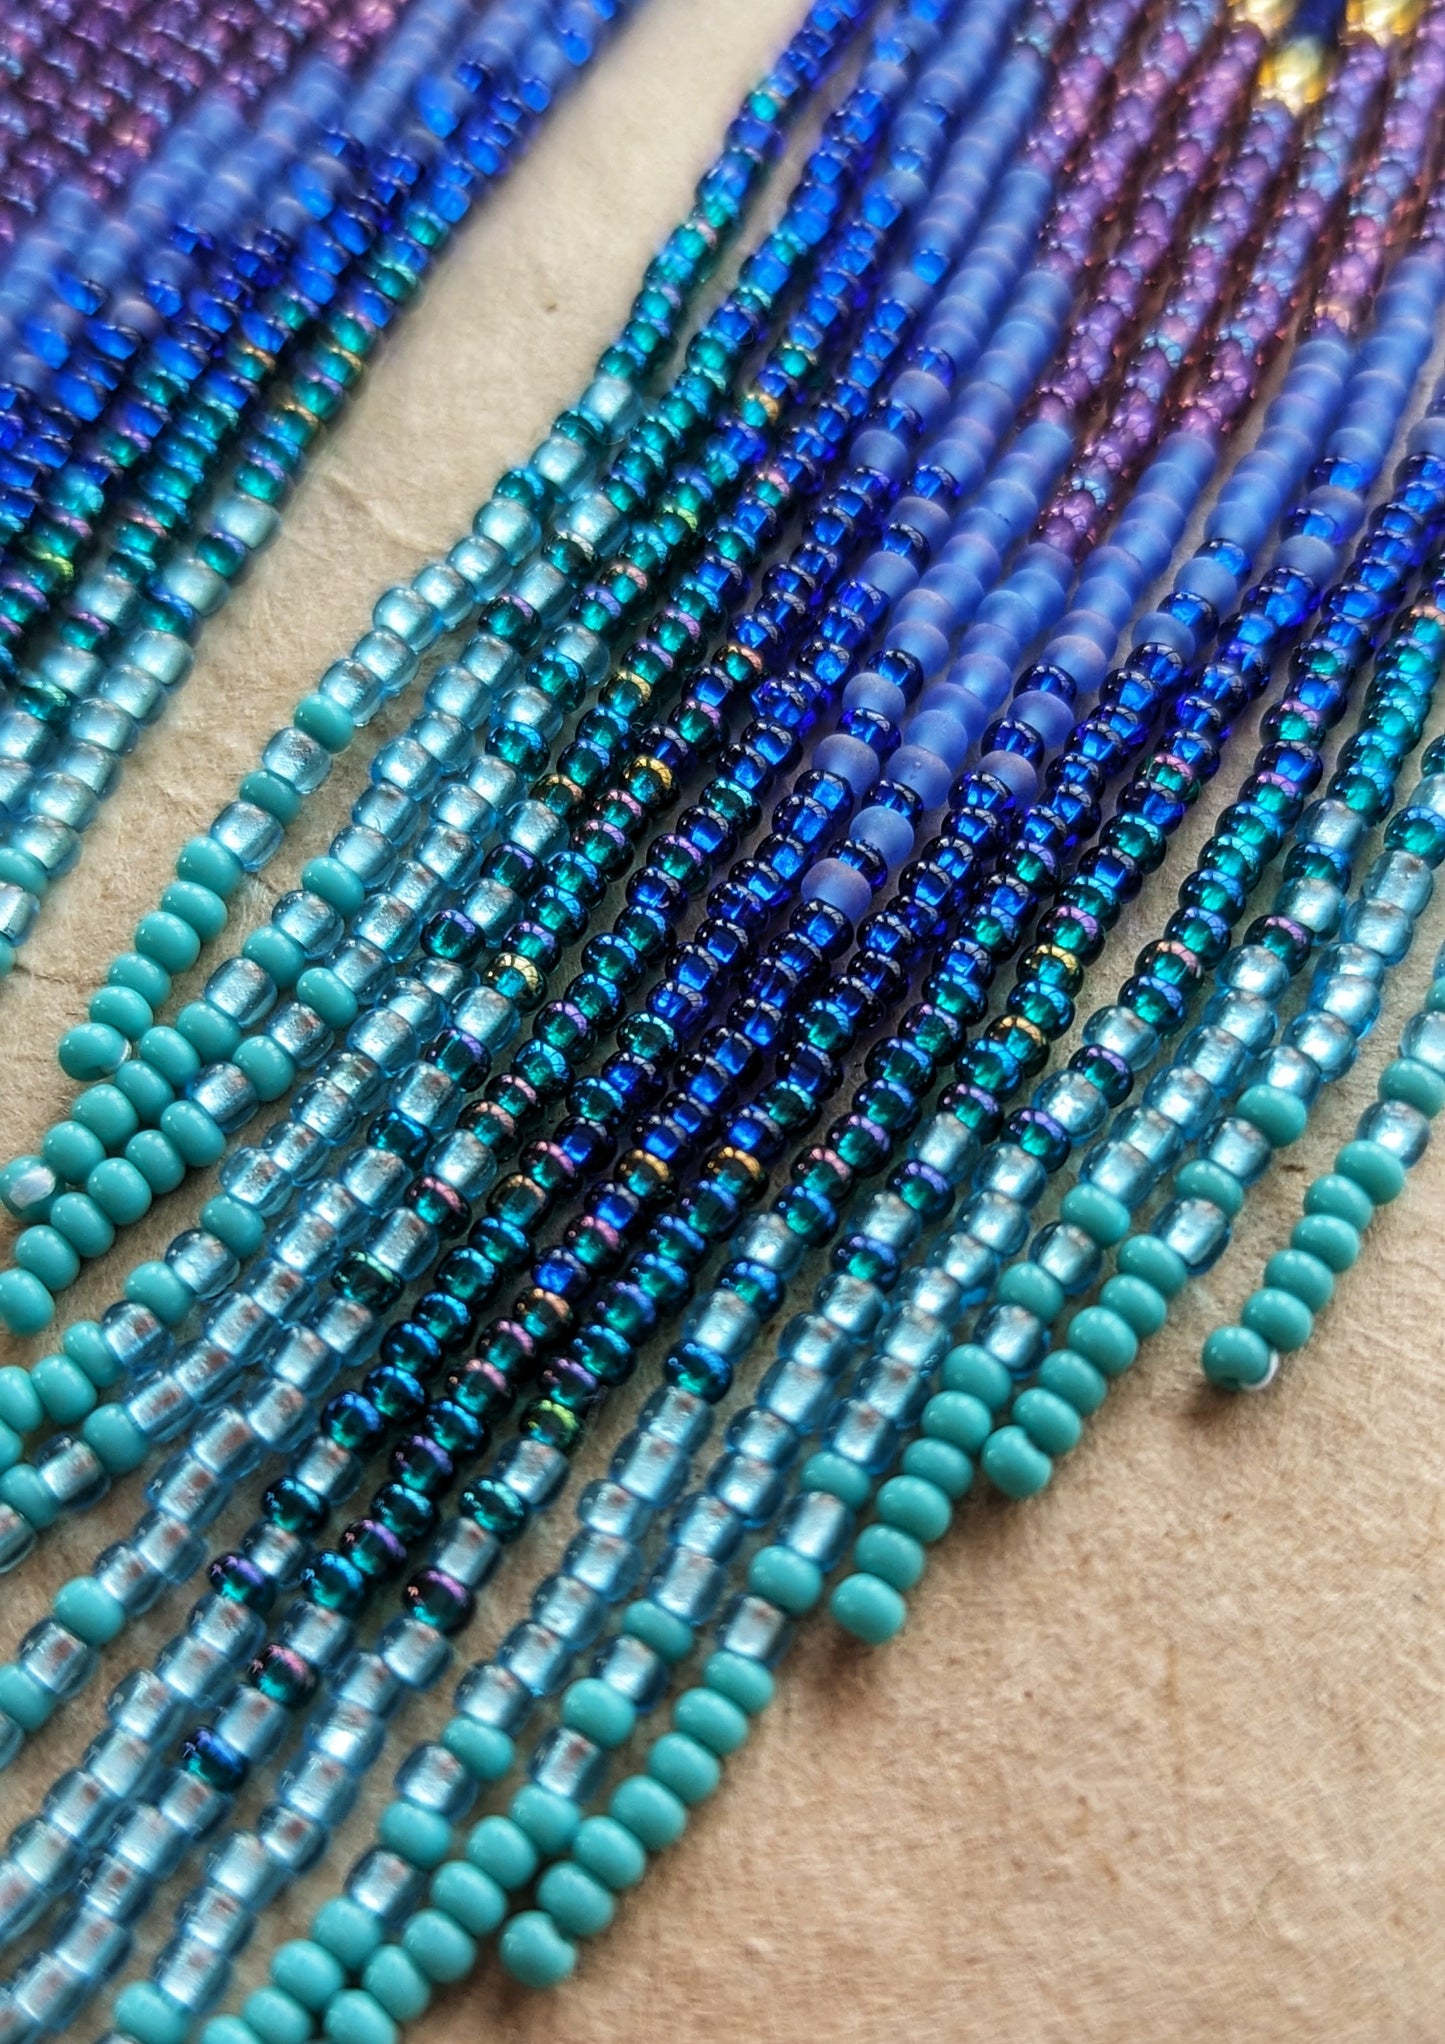 Amphitrite Lapis Lazuli Earrings